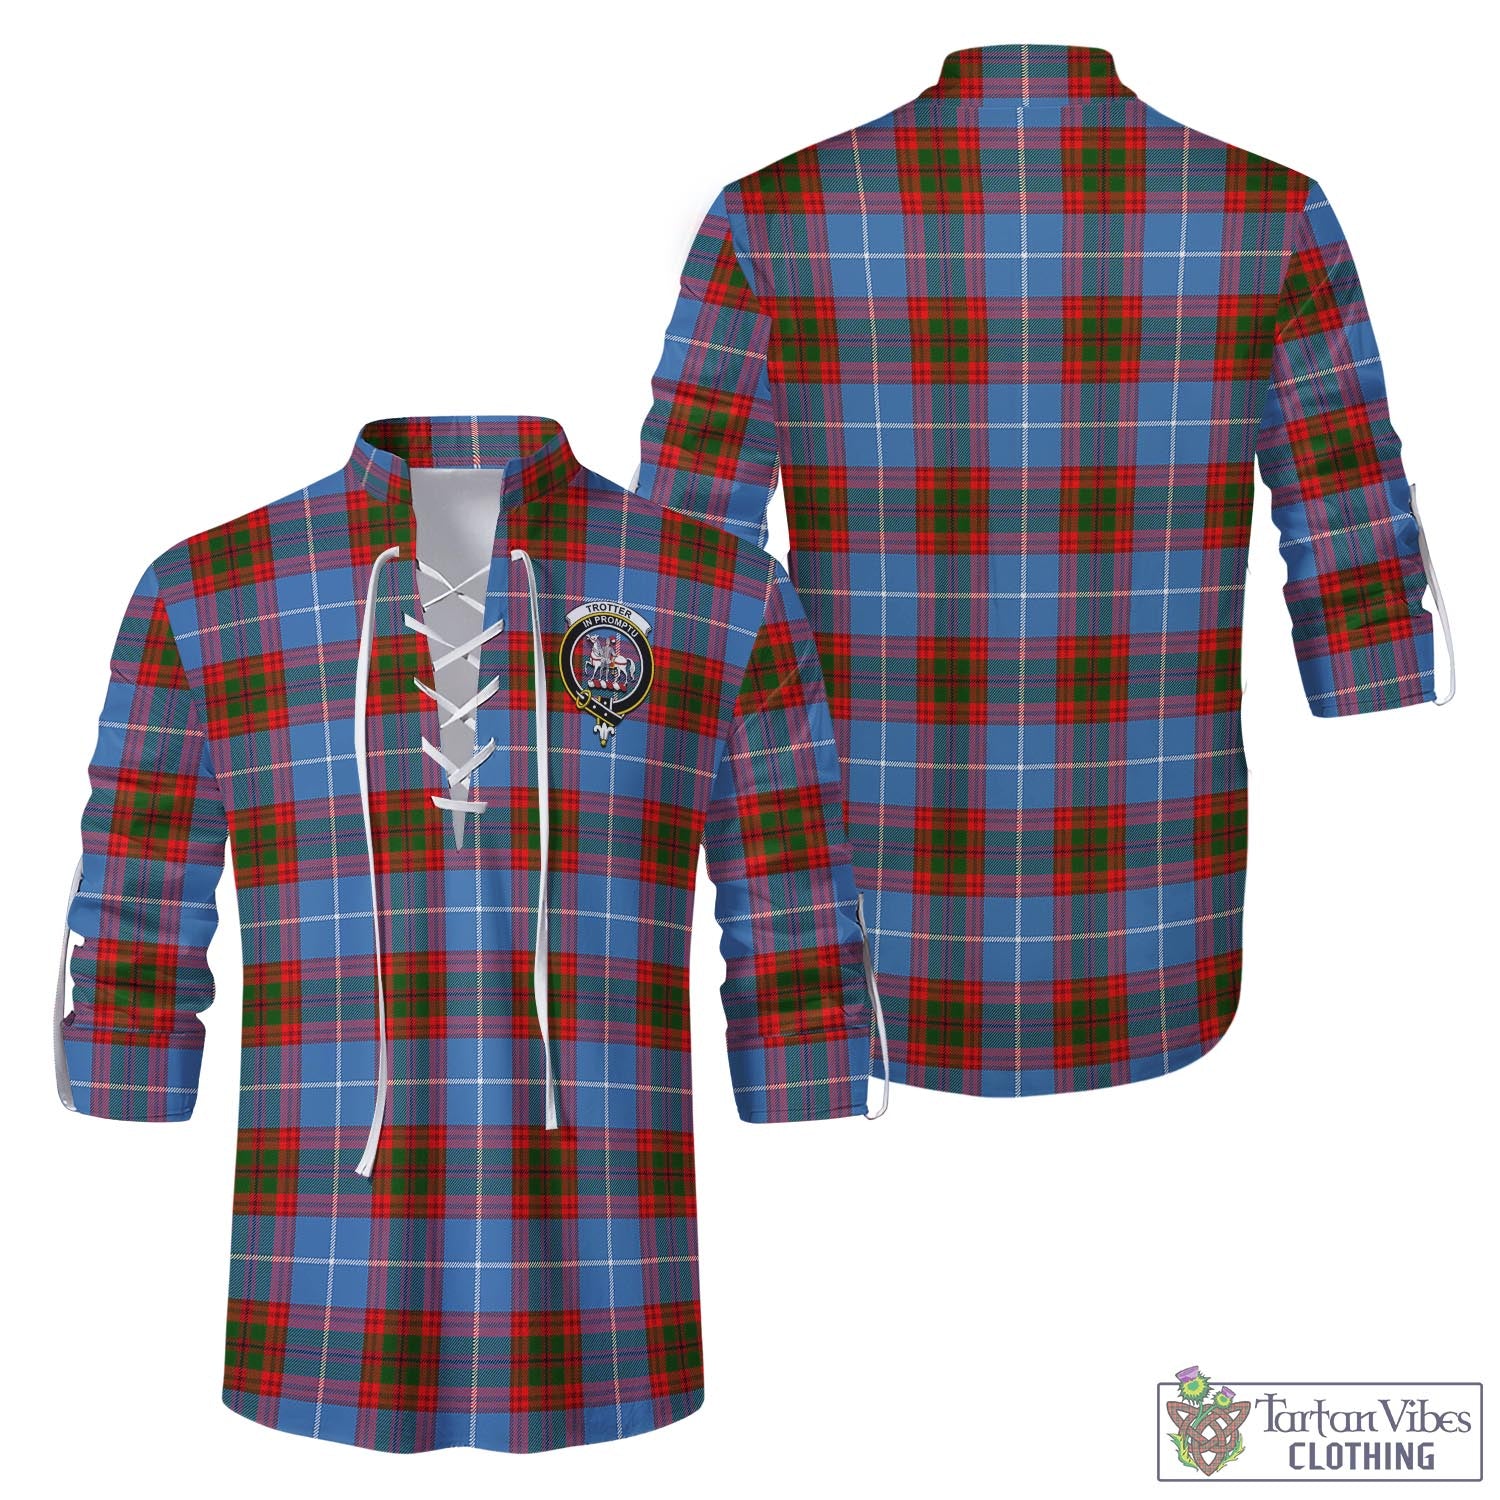 Tartan Vibes Clothing Trotter Tartan Men's Scottish Traditional Jacobite Ghillie Kilt Shirt with Family Crest